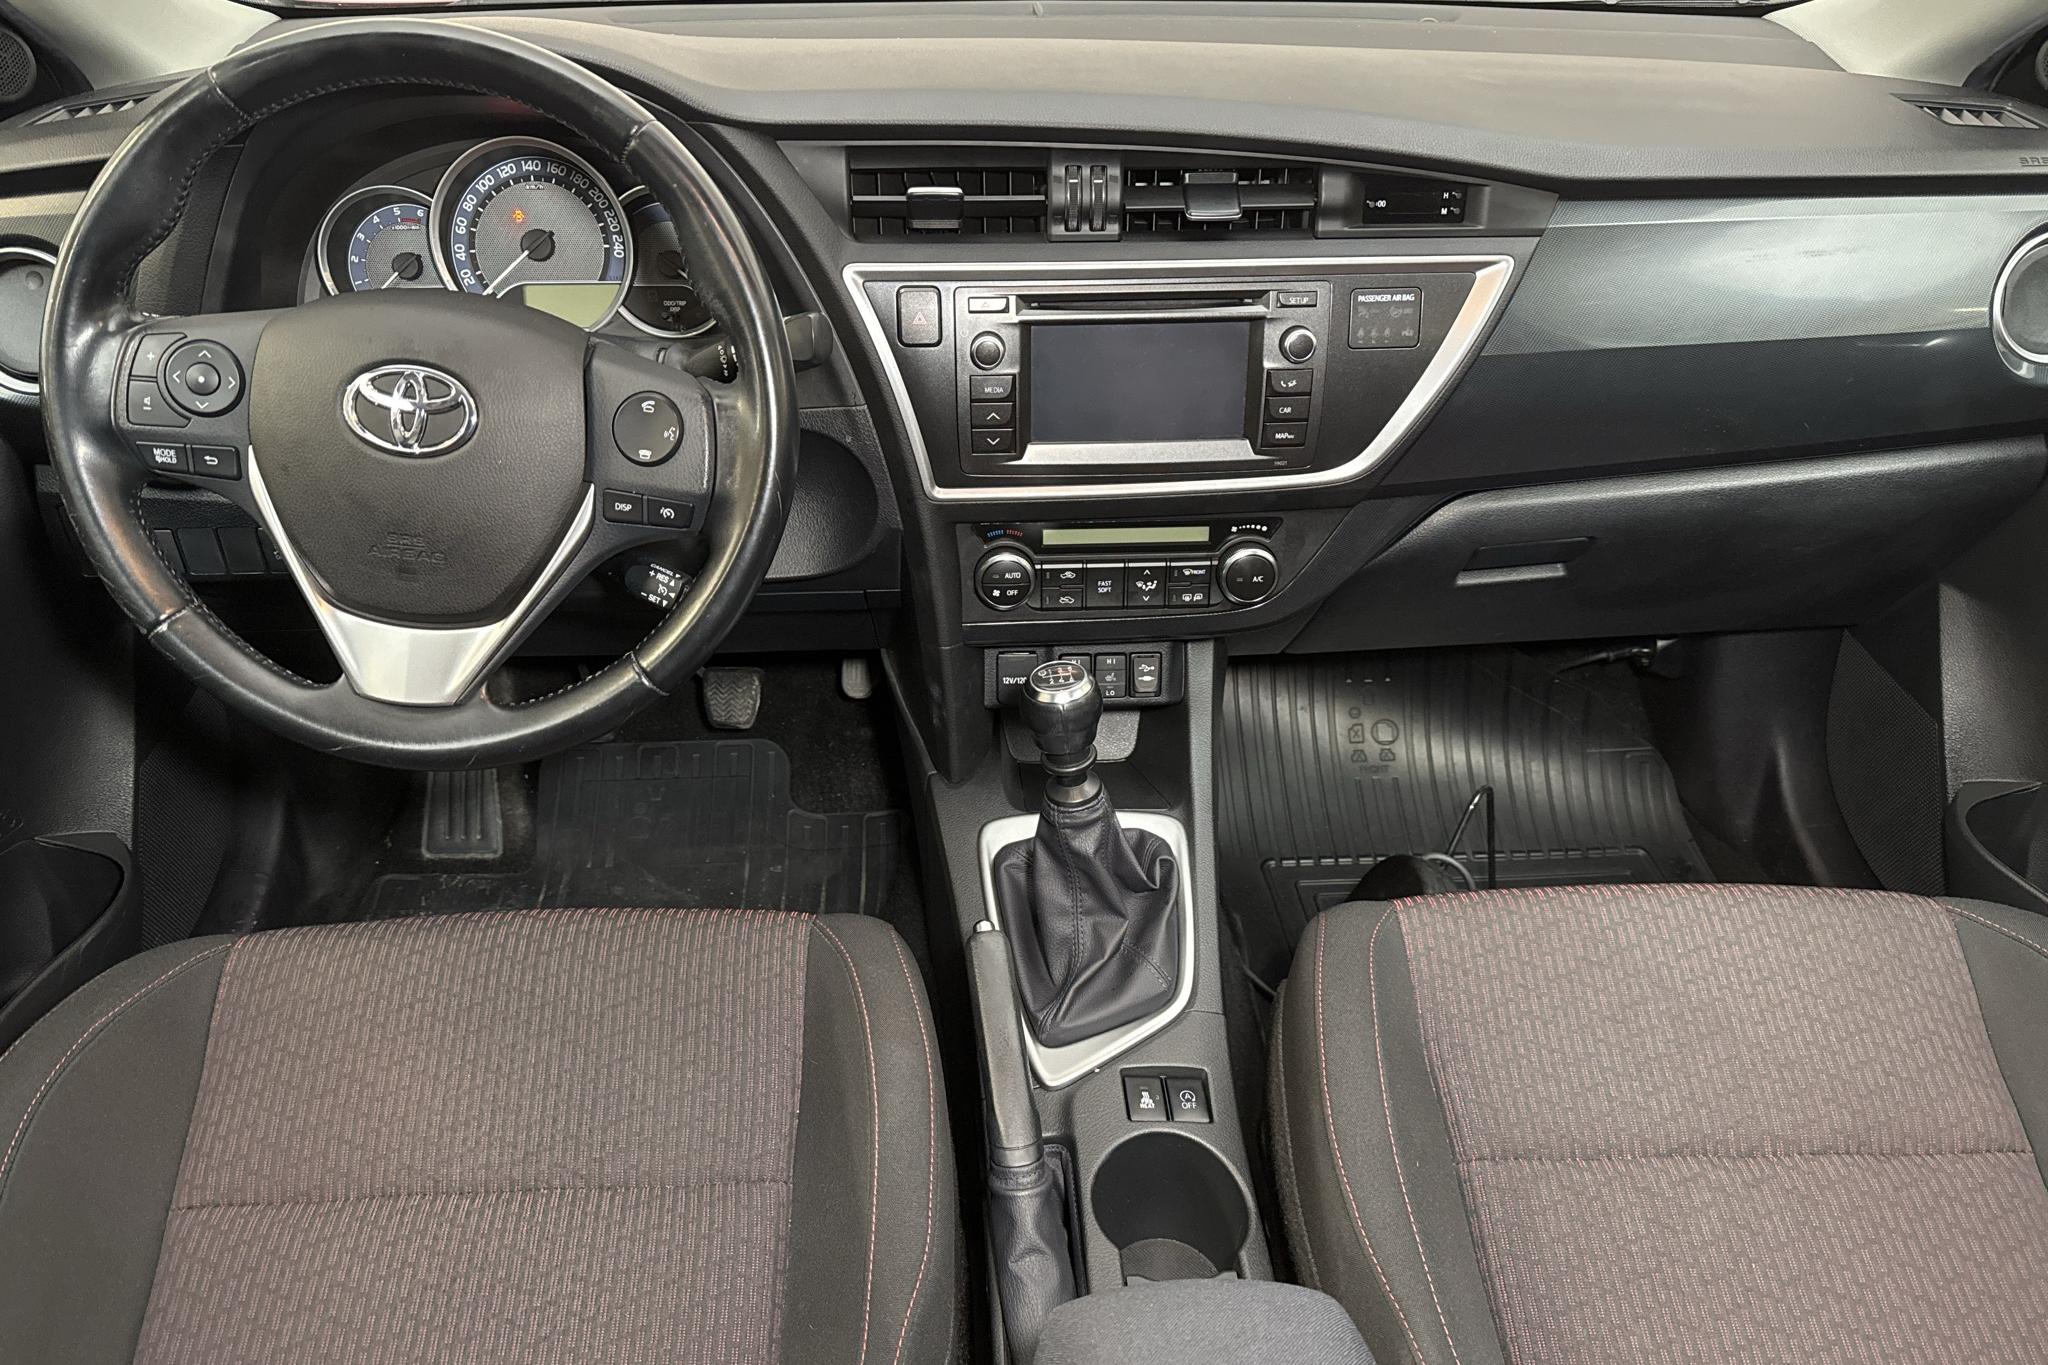 Toyota Auris 2.0 D-4D Touring Sports (124hk) - 172 230 km - Manual - Dark Red - 2014